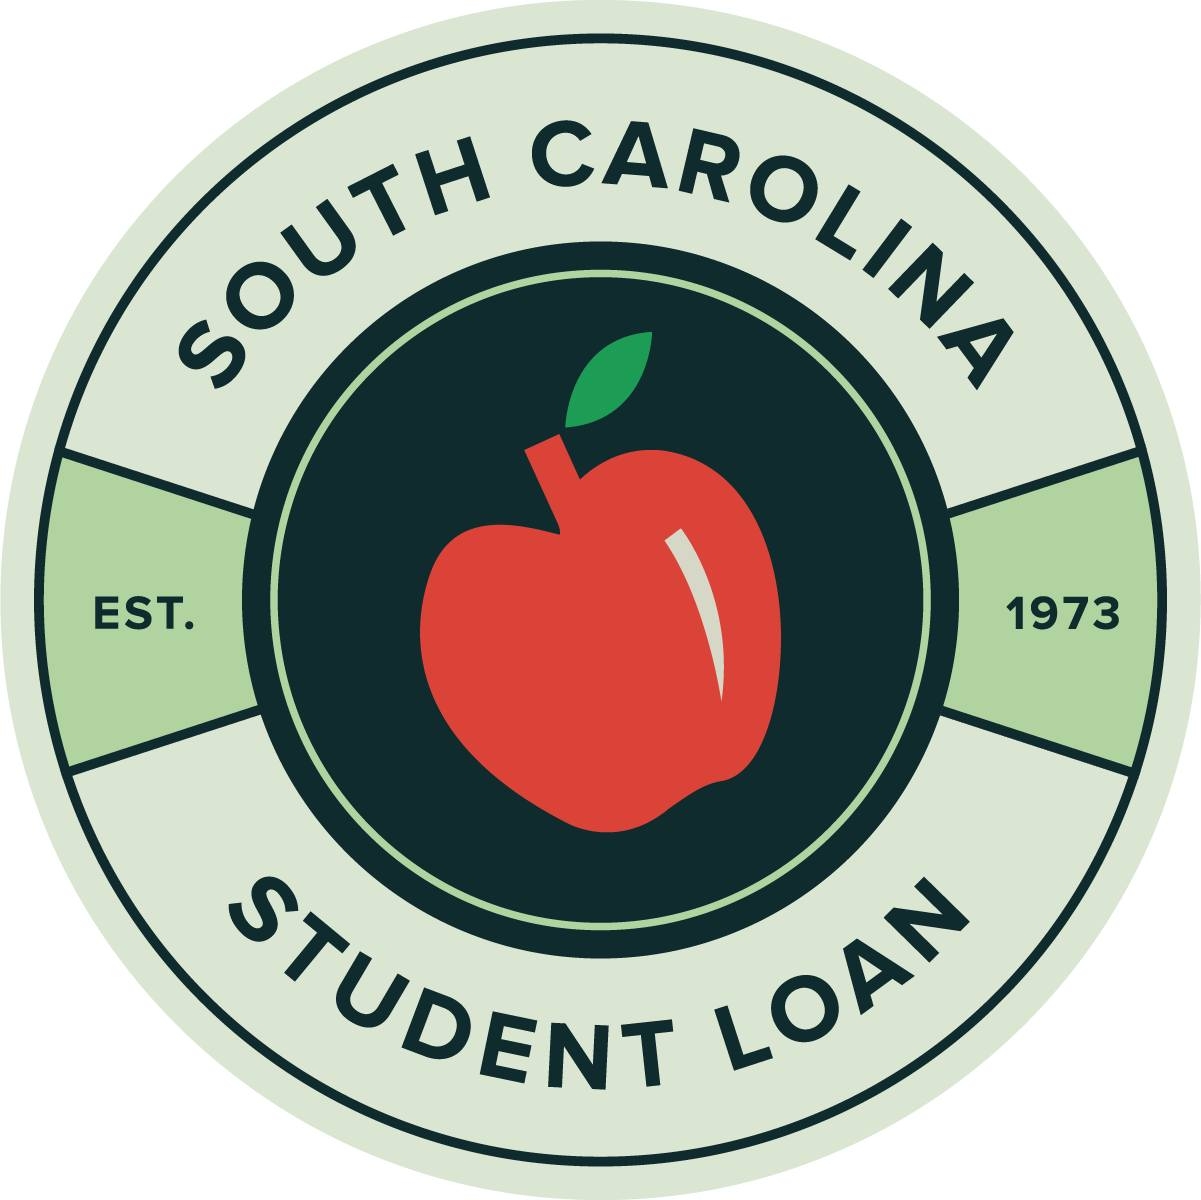 South Carolina Student Loan